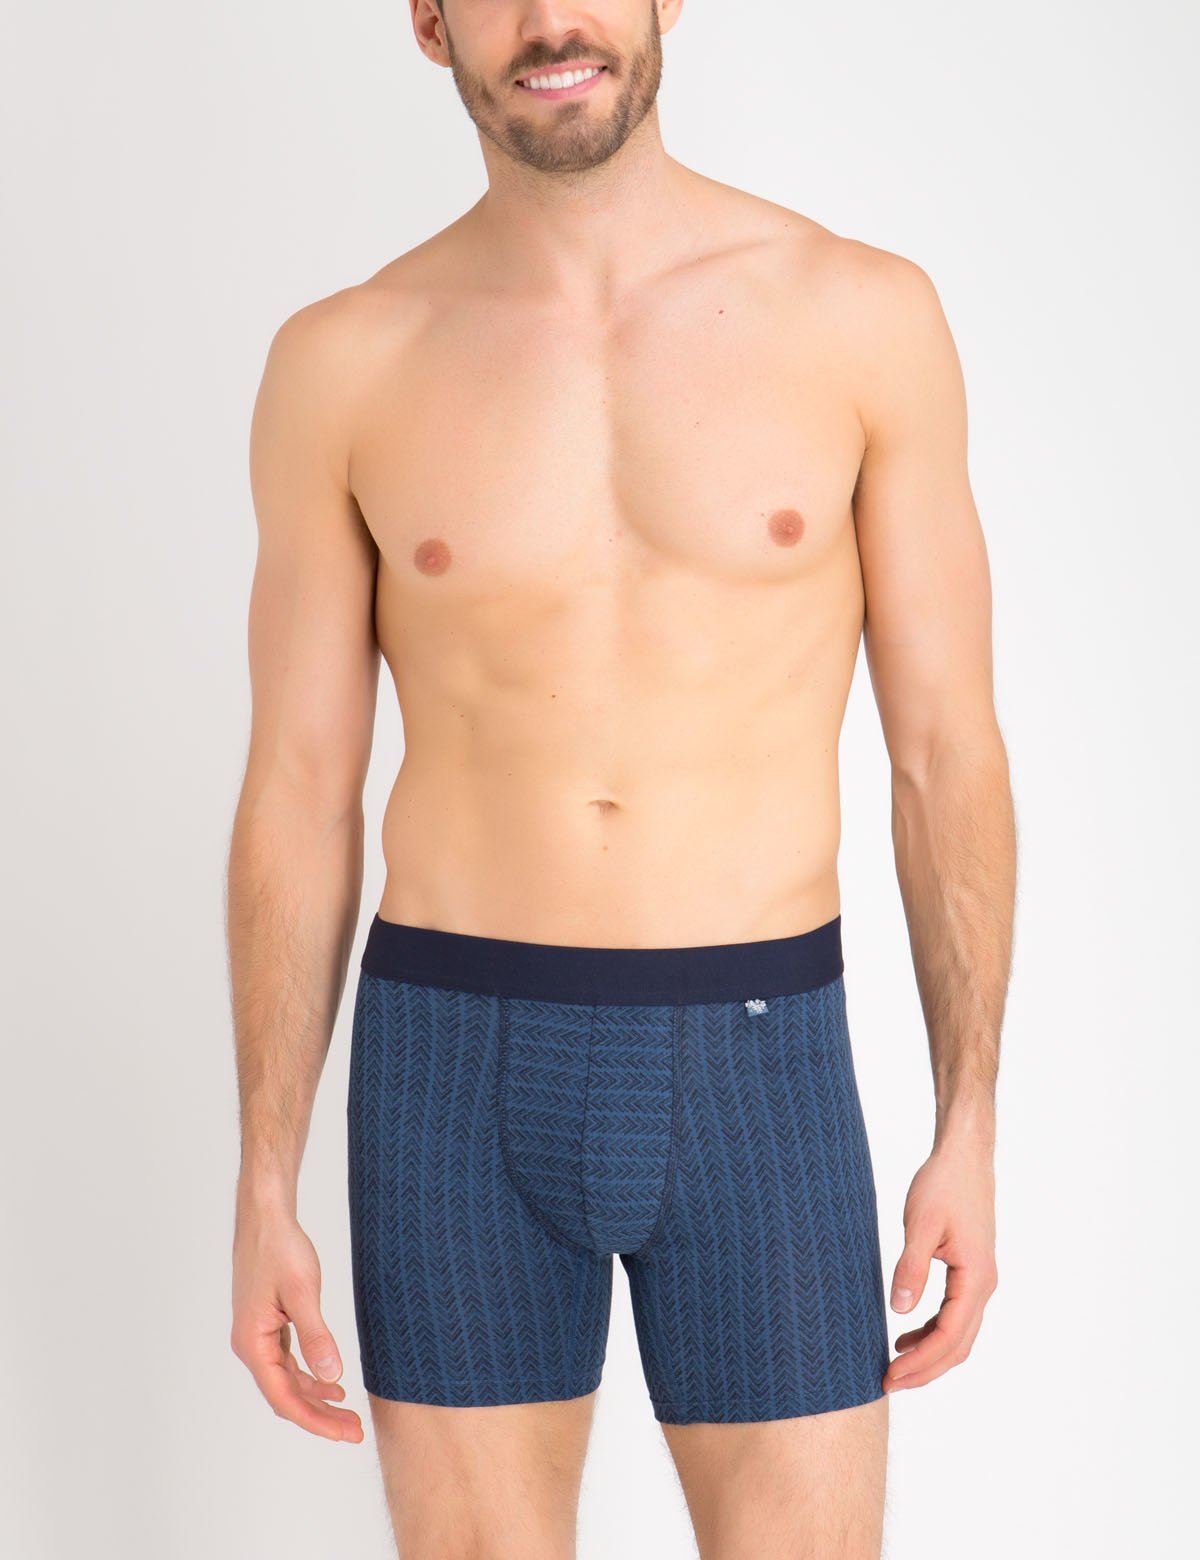 U.S. Polo Assn. Men's Cotton Stretch Mid Leg Boxer Briefs Underwear, 4.5  Inch, 3 Pack